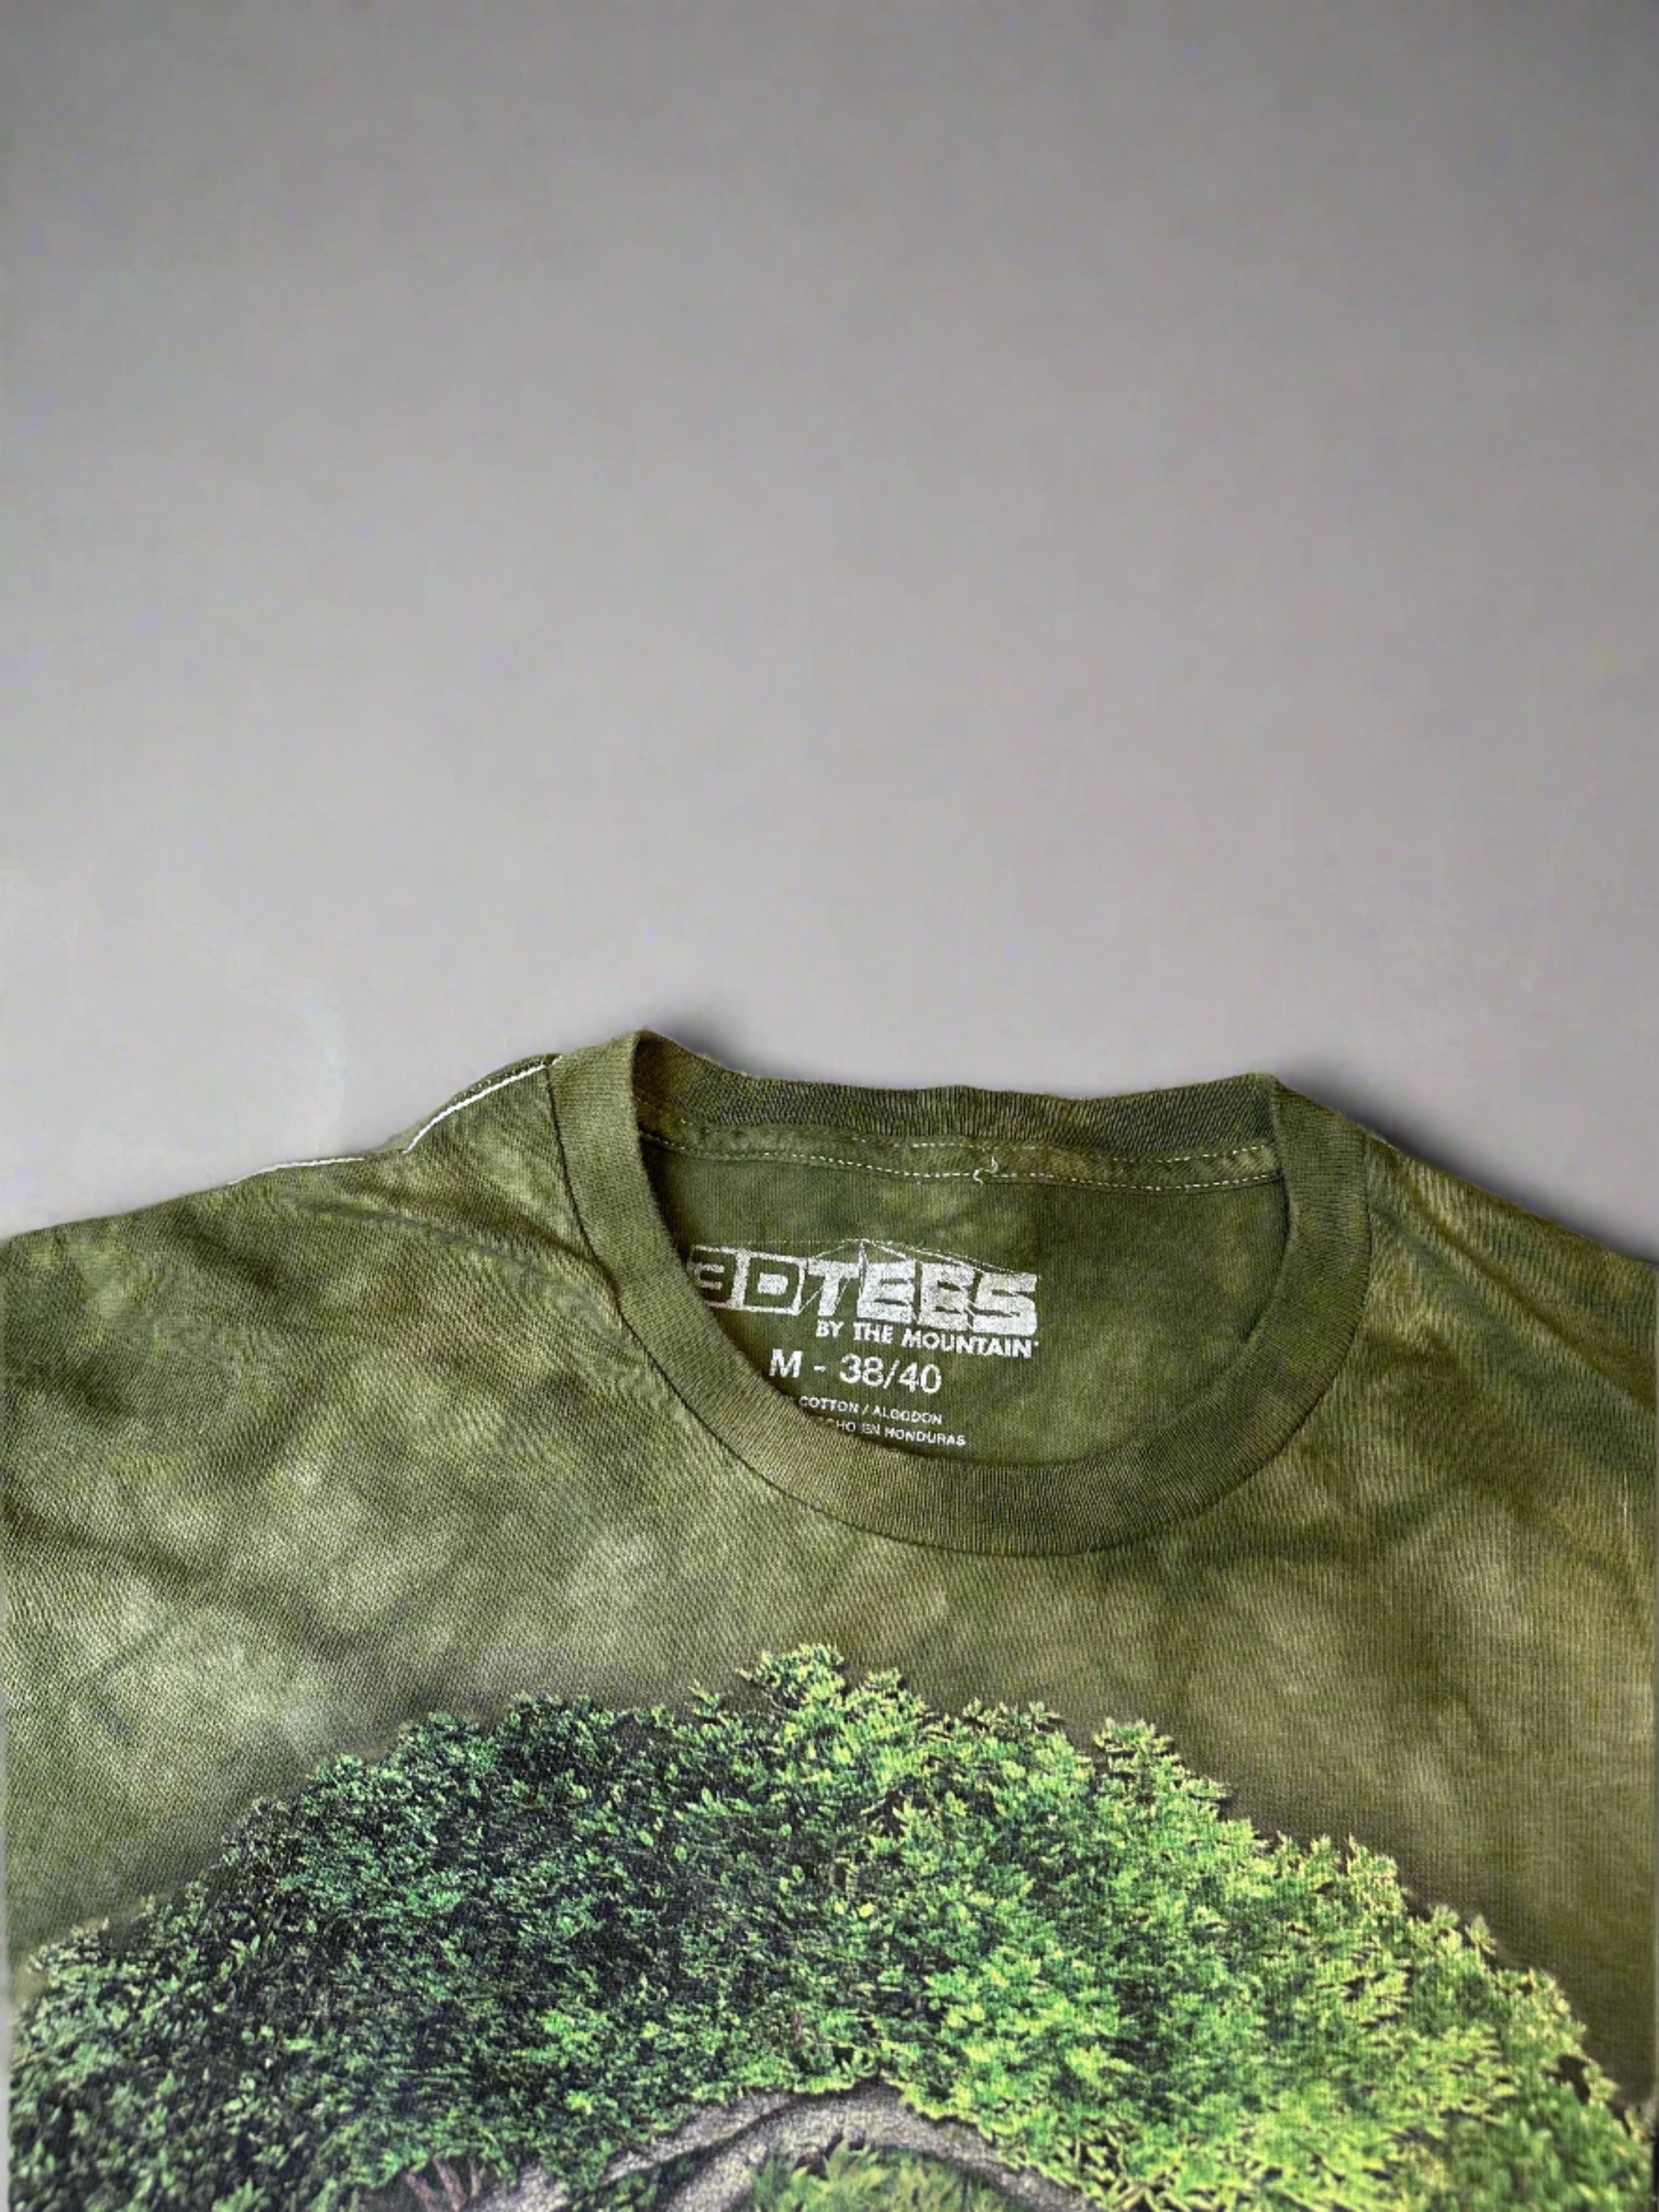 Vintage Tree T-shirt - size M